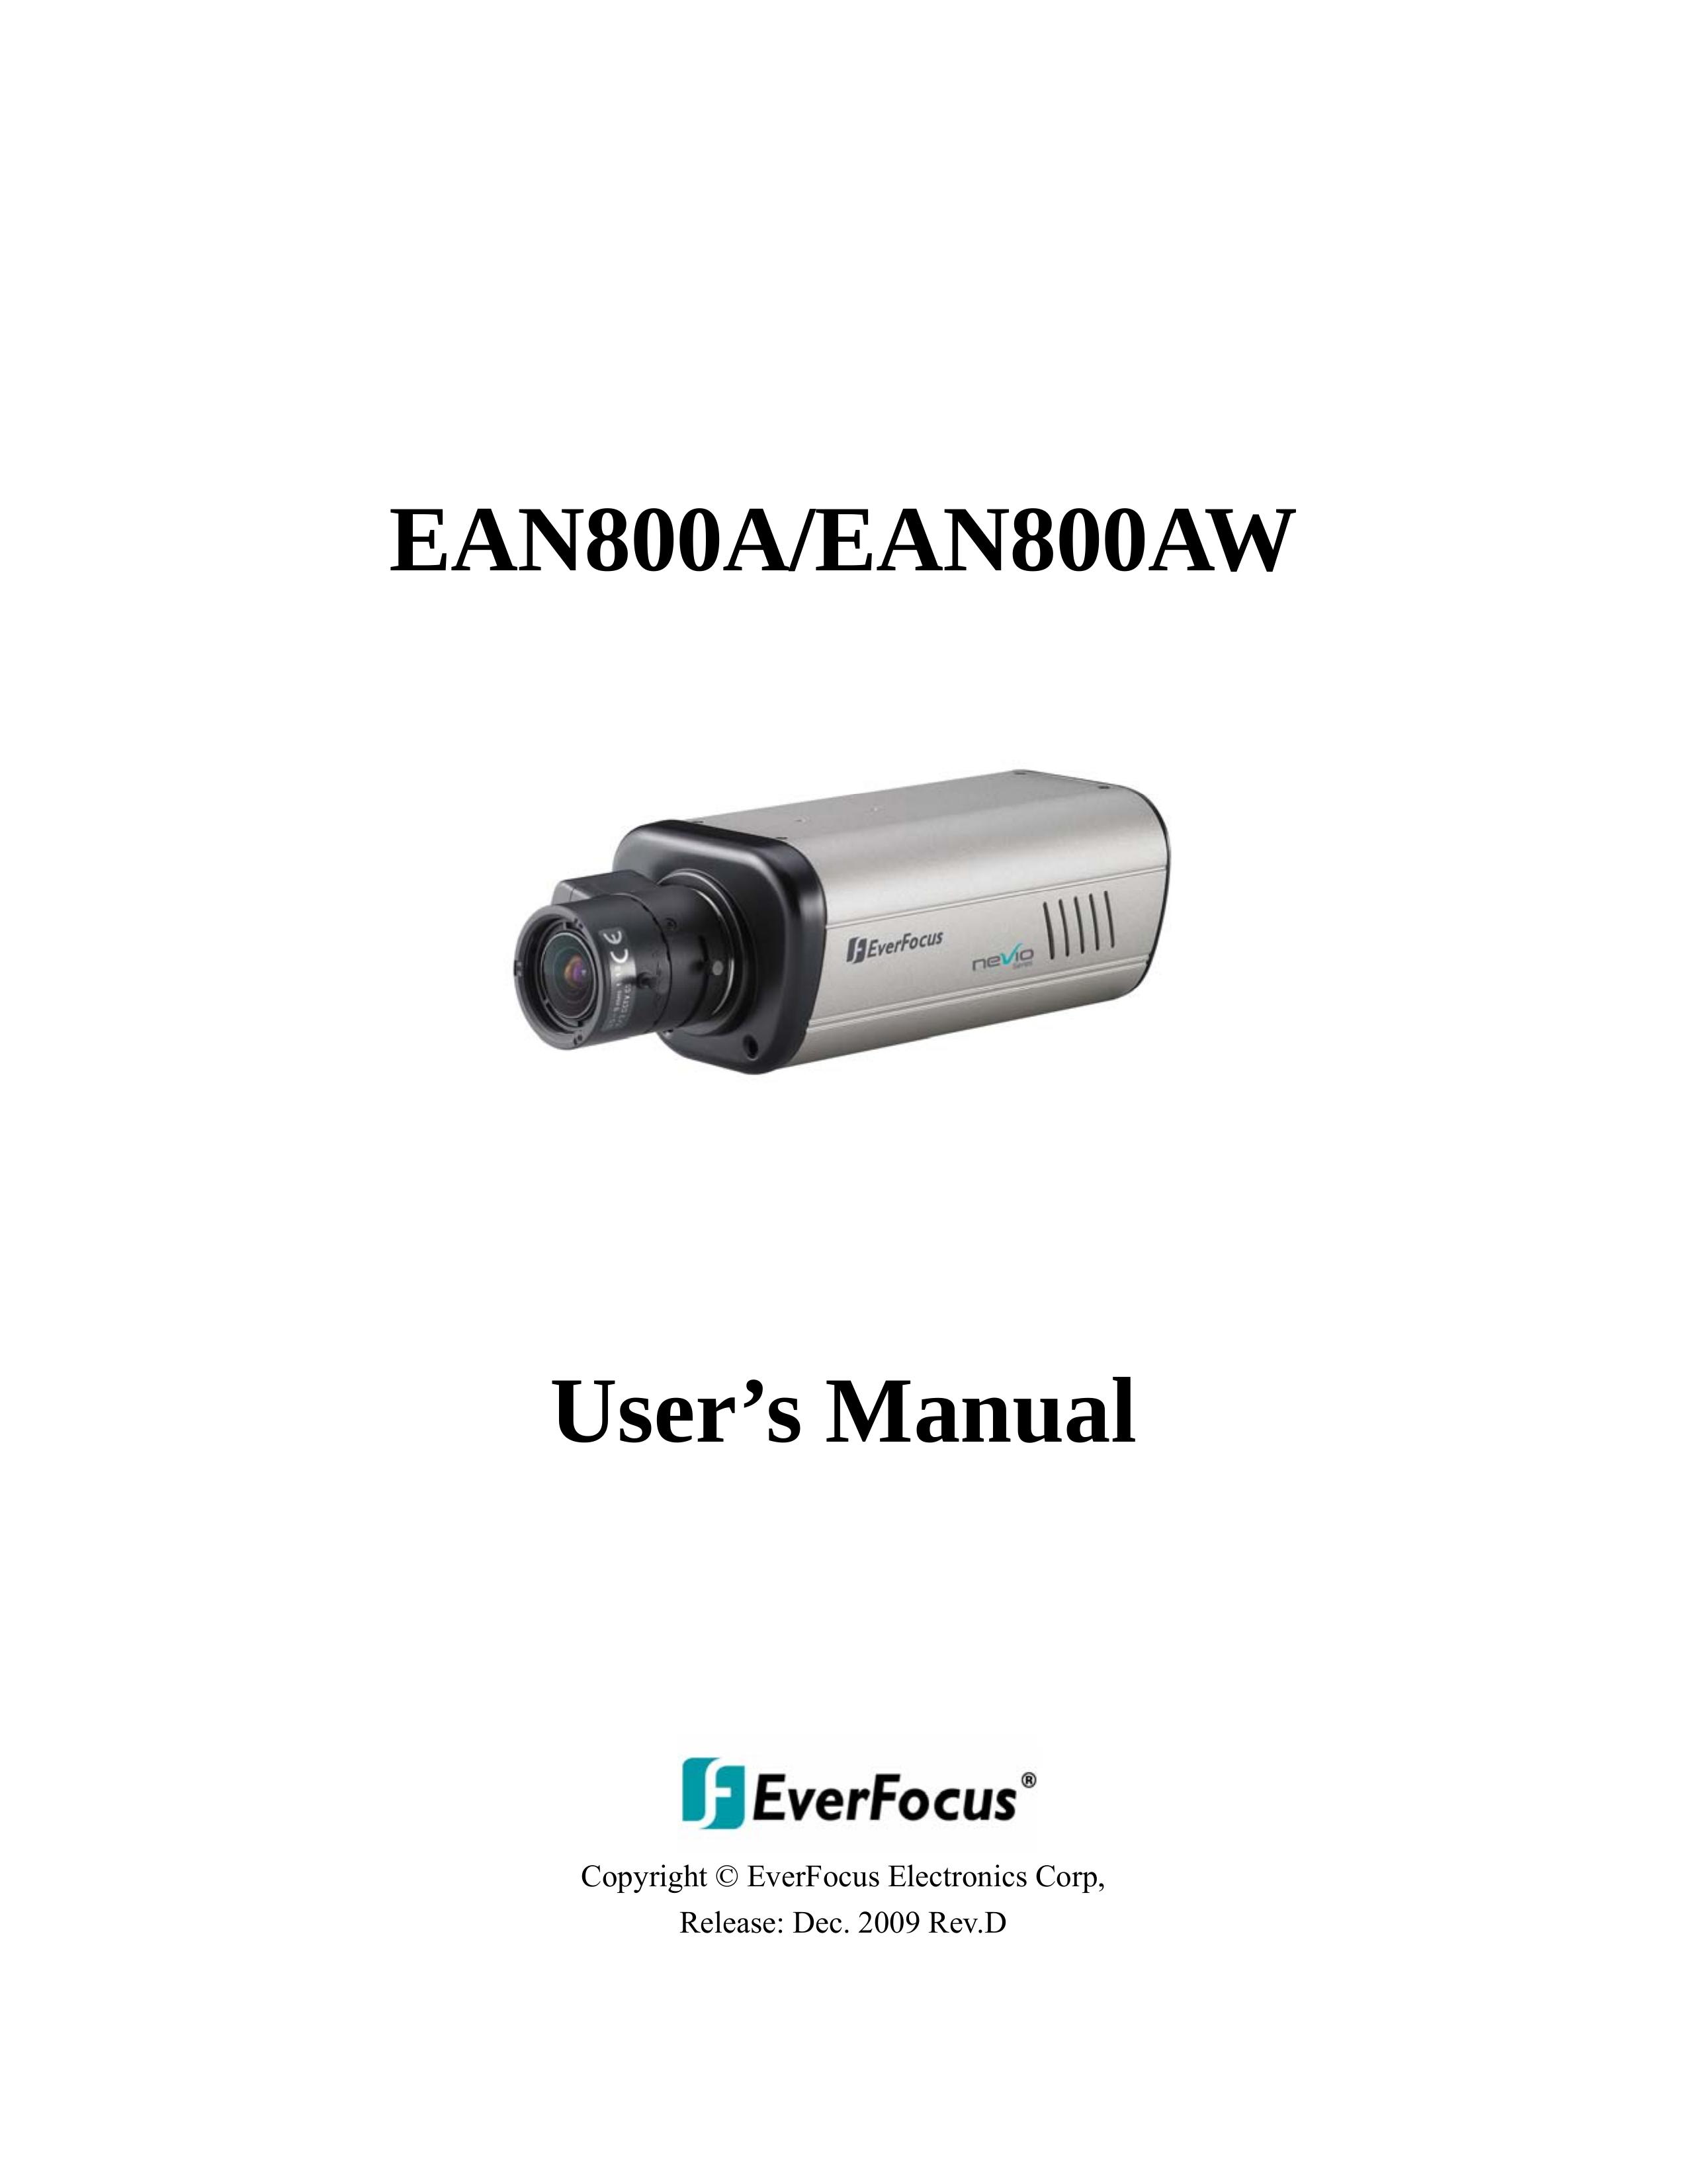 EverFocus EAN800A Security Camera User Manual